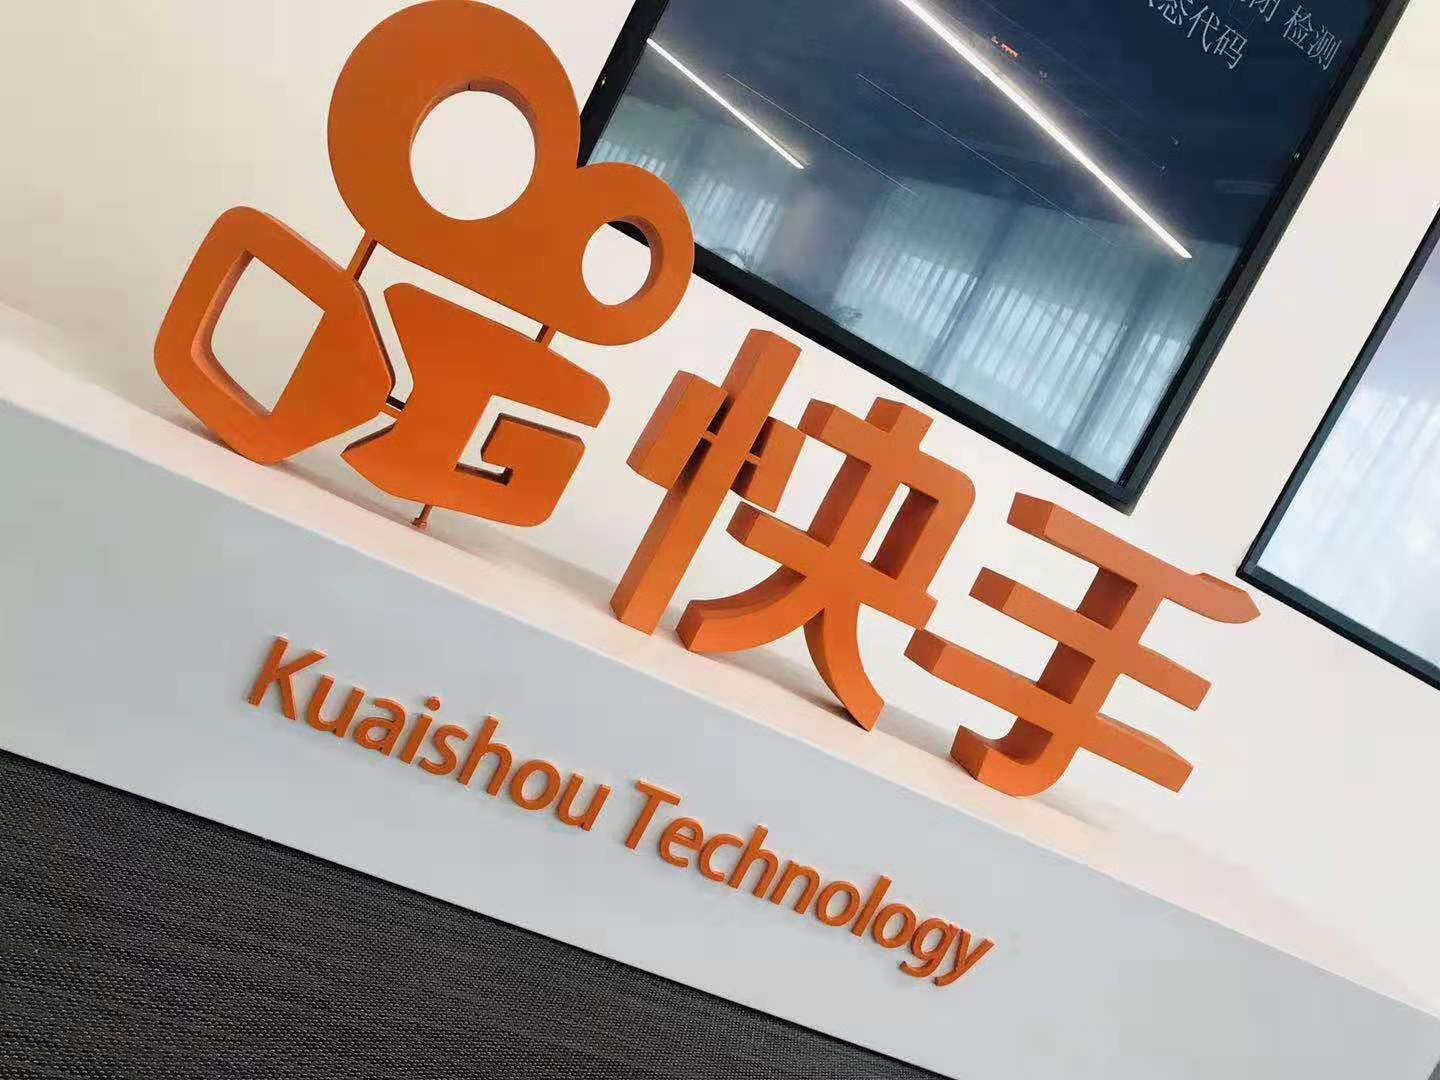 China's Kuaishou aims to raise up to $5.42 billion in Hong Kong IPO